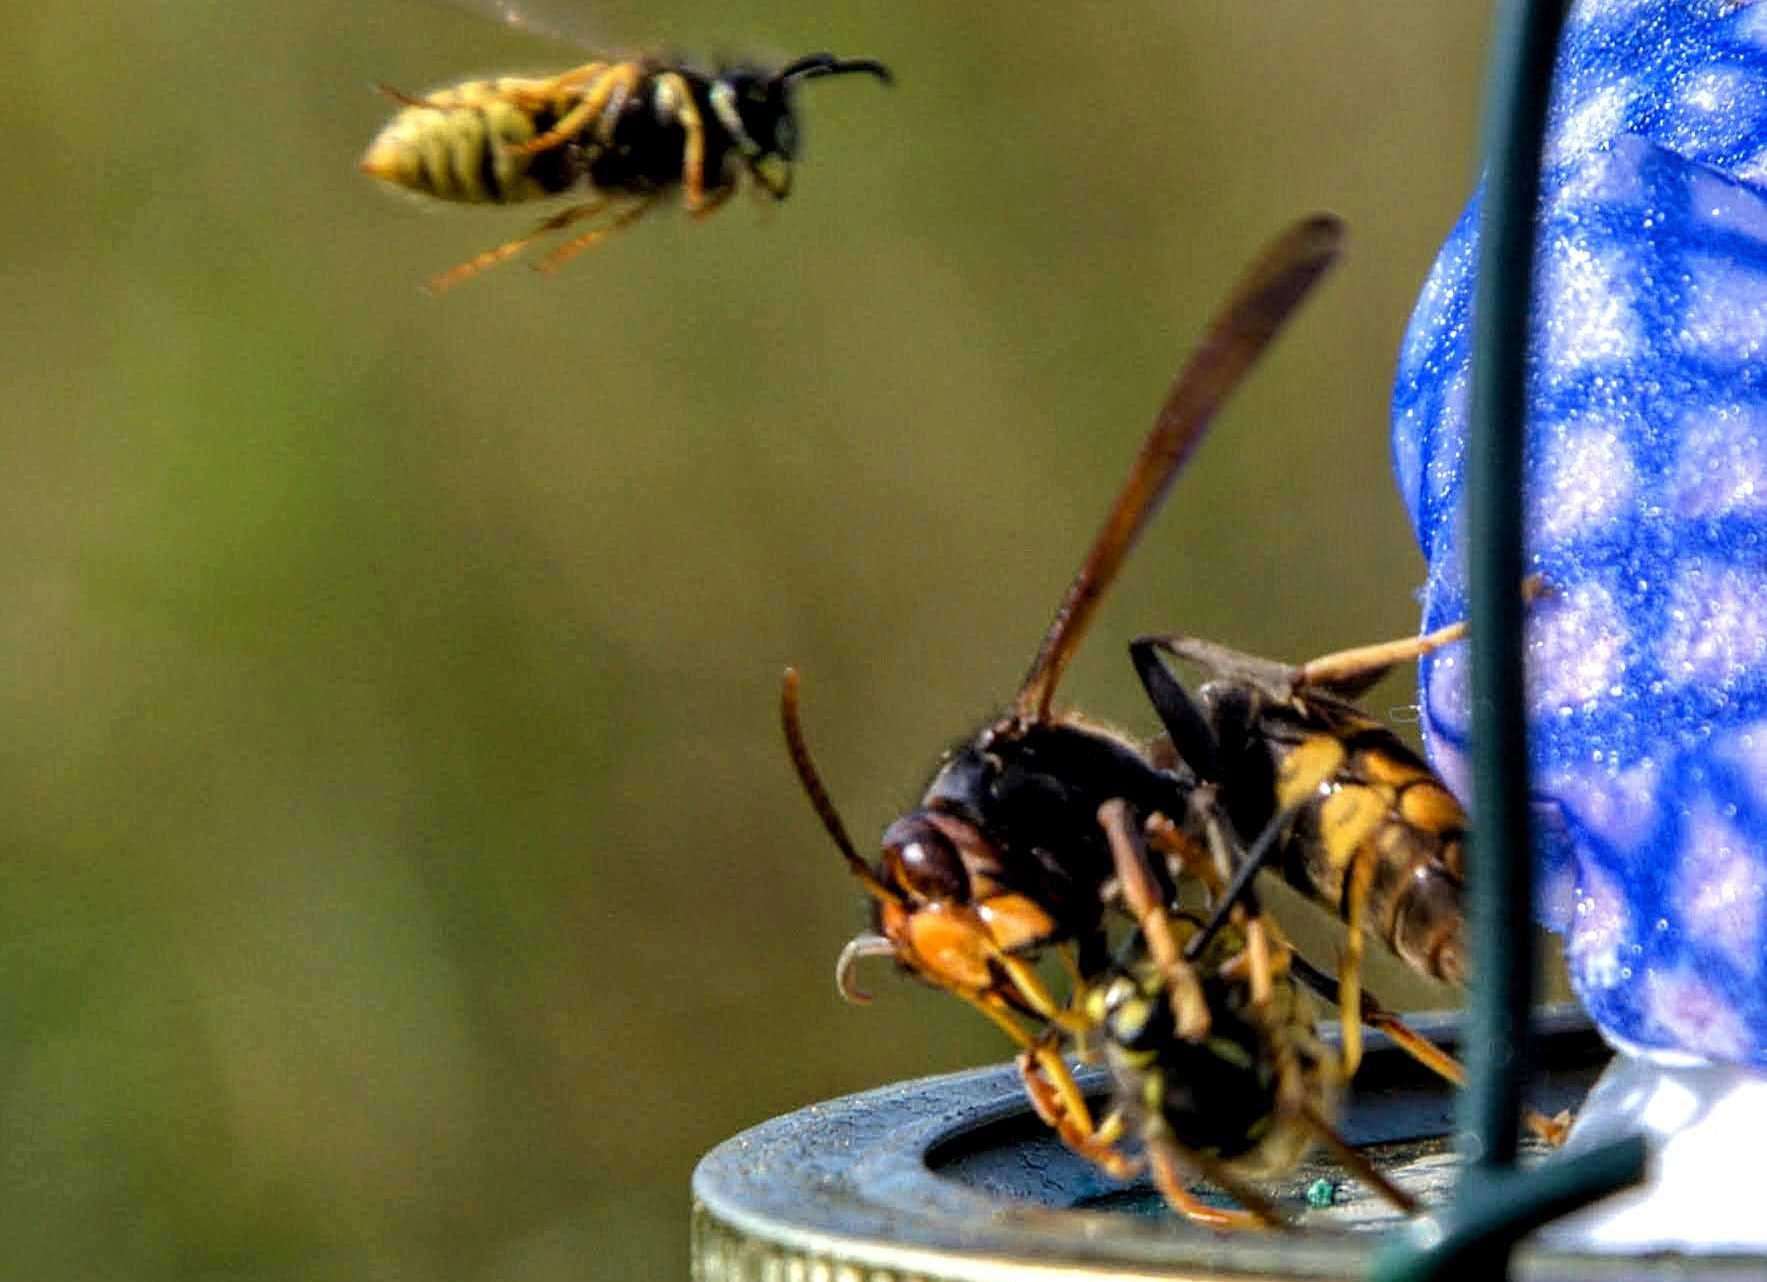 Asian Hornets are invasive and kill honeybees